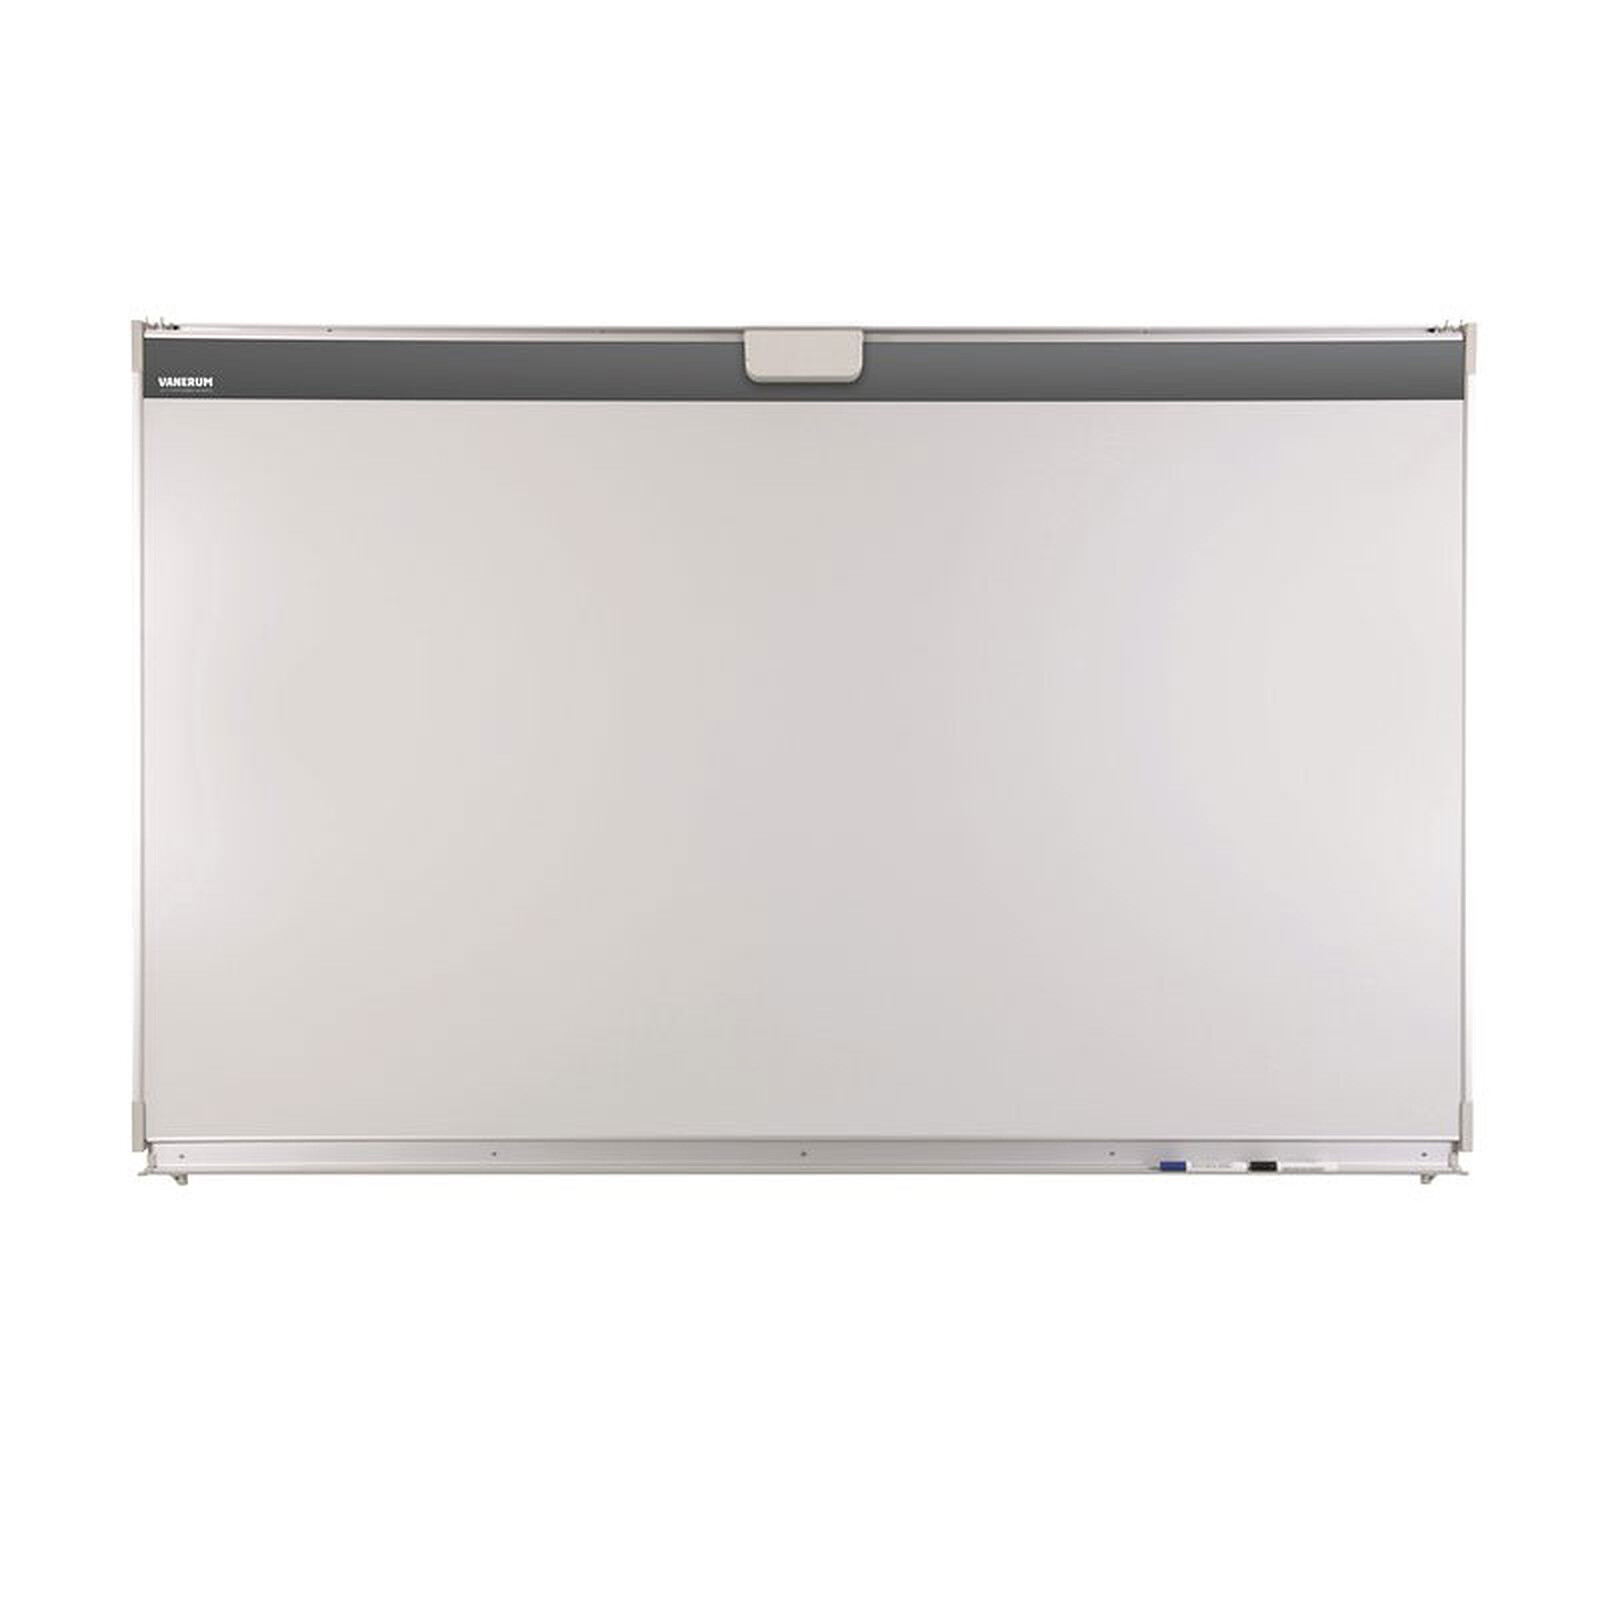 BIC Velleda tableau 44 x 55 cm - Tableau blanc et paperboard - LDLC